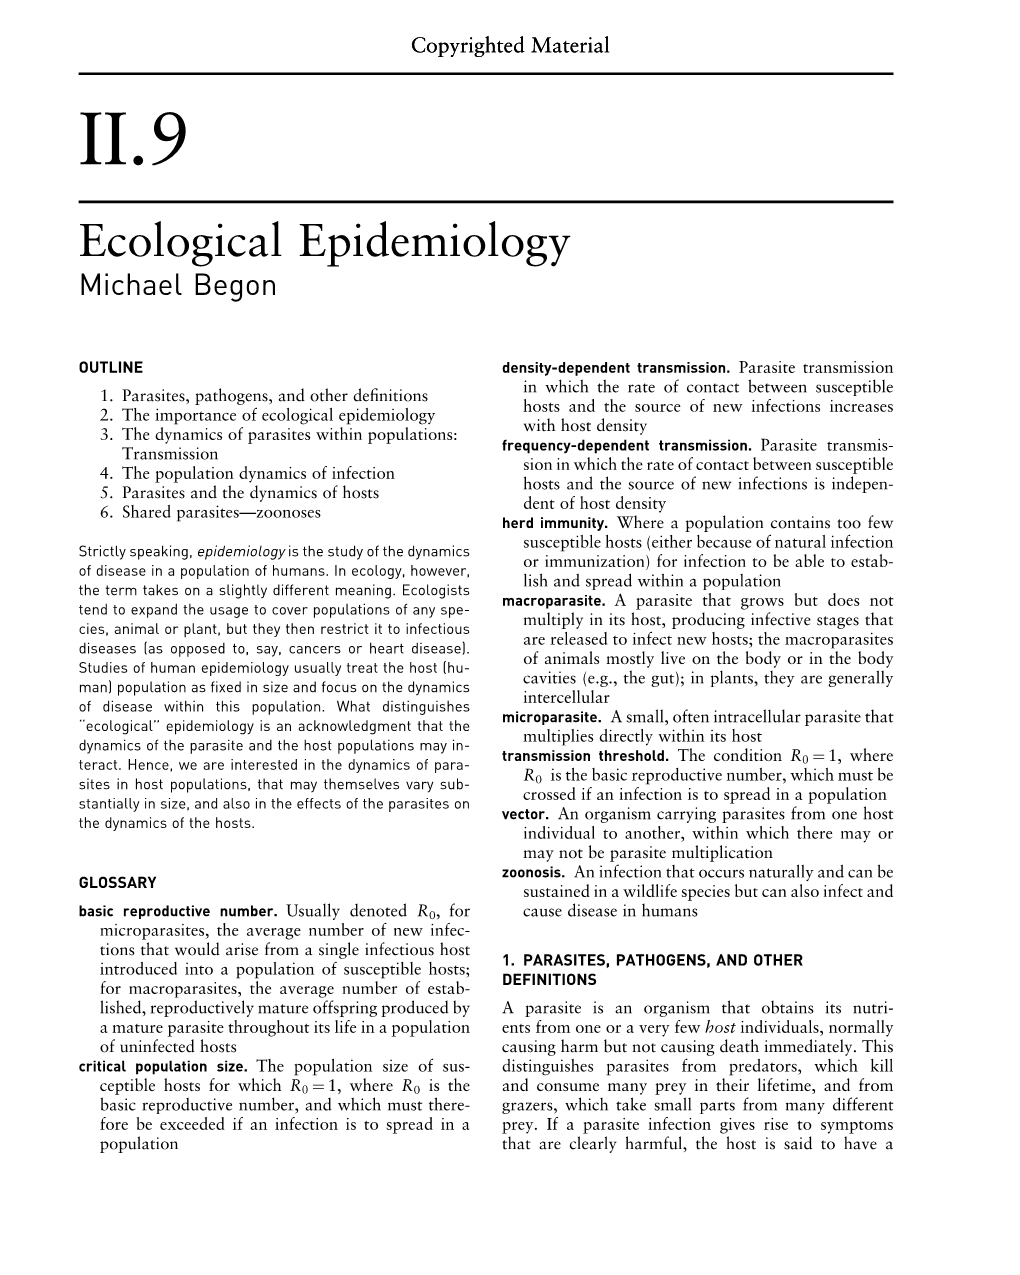 Ecological Epidemiology Michael Begon